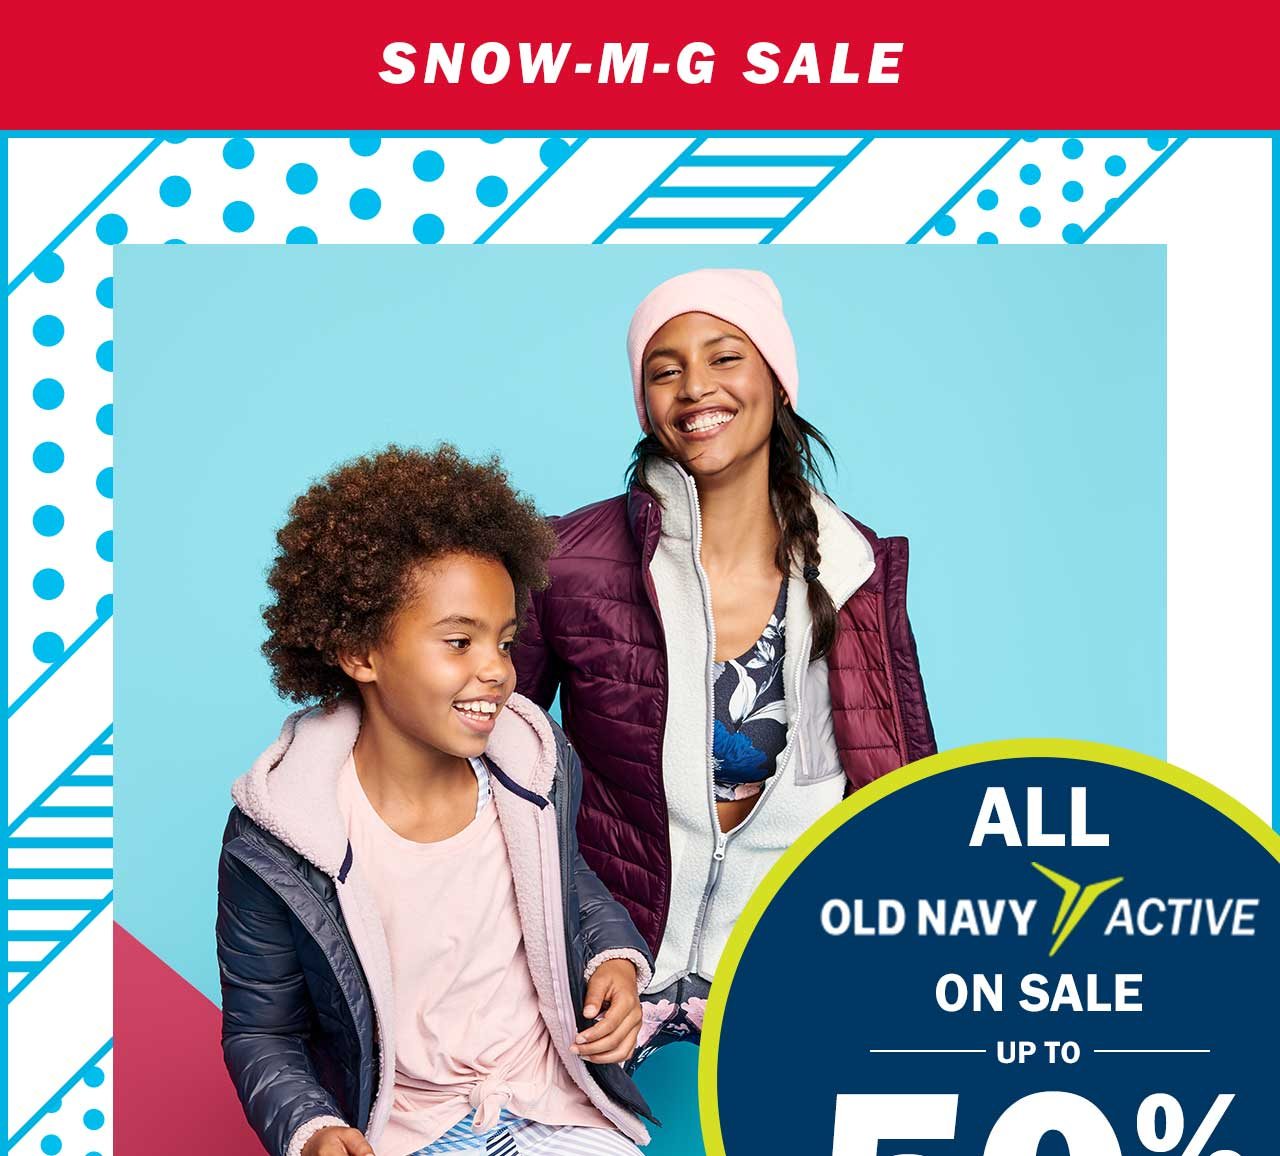 Snow-m-g sale